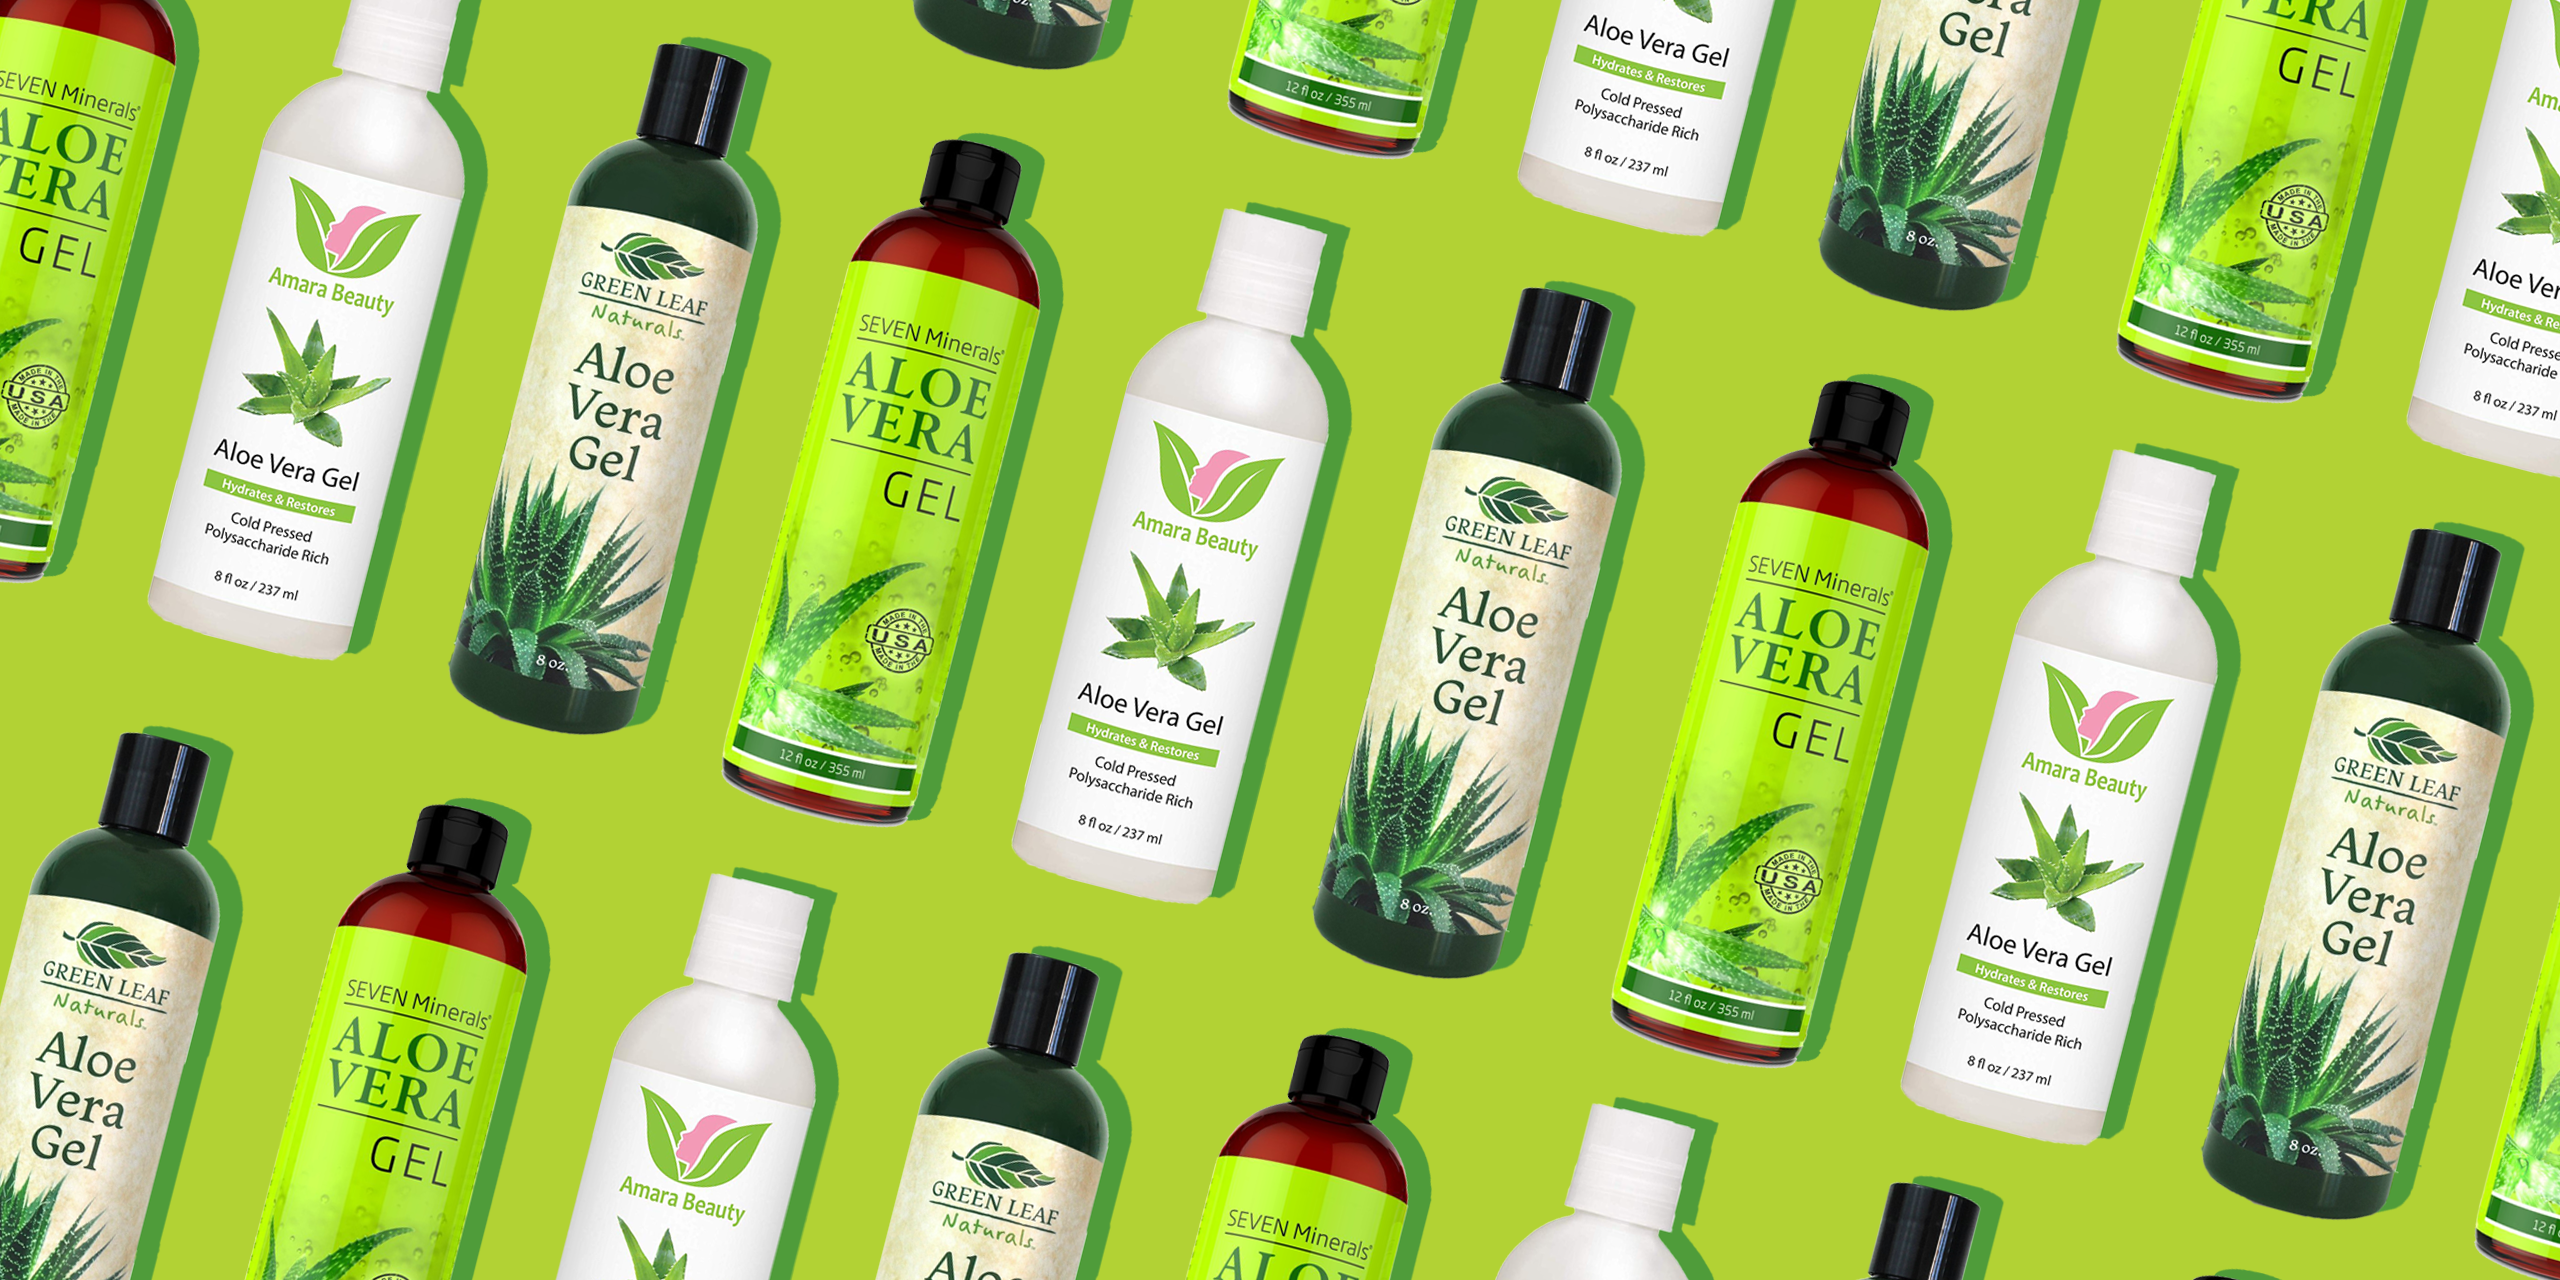 10 Best Aloe Vera Gels for Your Skin – Top Aloe Vera for Sunburn